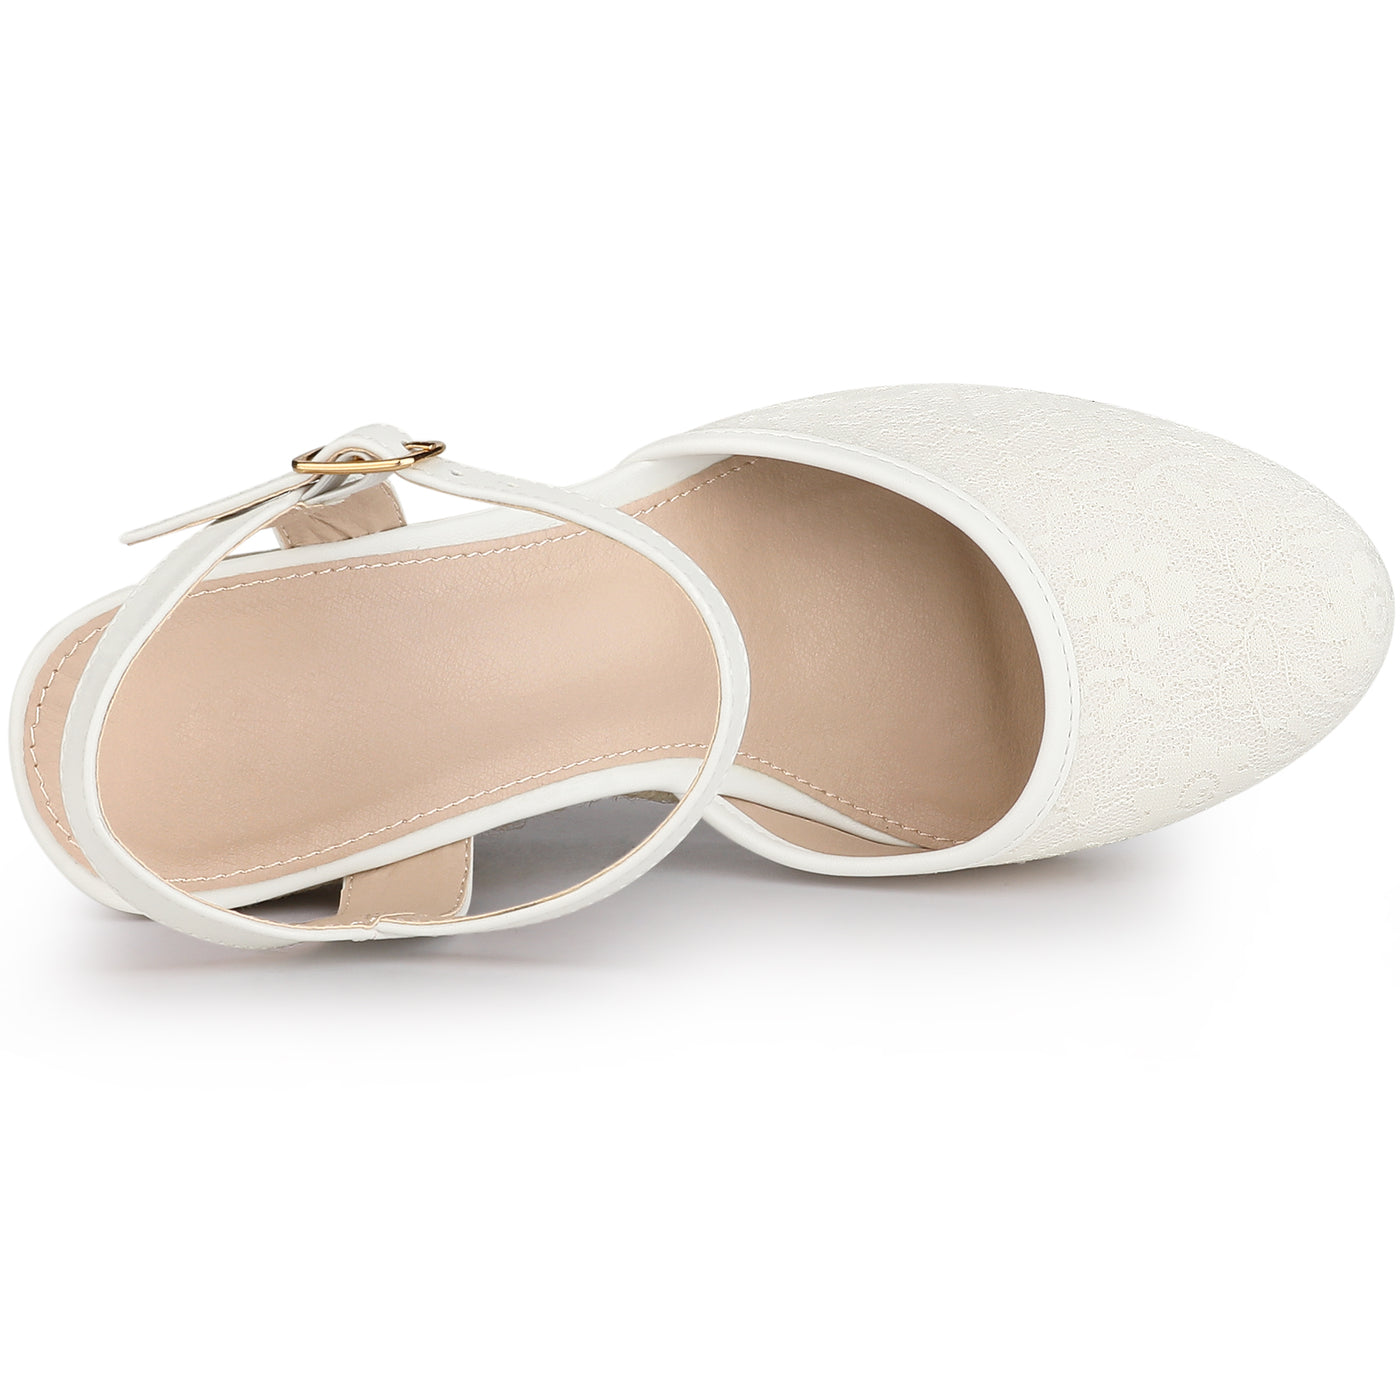 Allegra K Women's Espadrille Platform Closed Toe Lace Wedge Heel Sandals